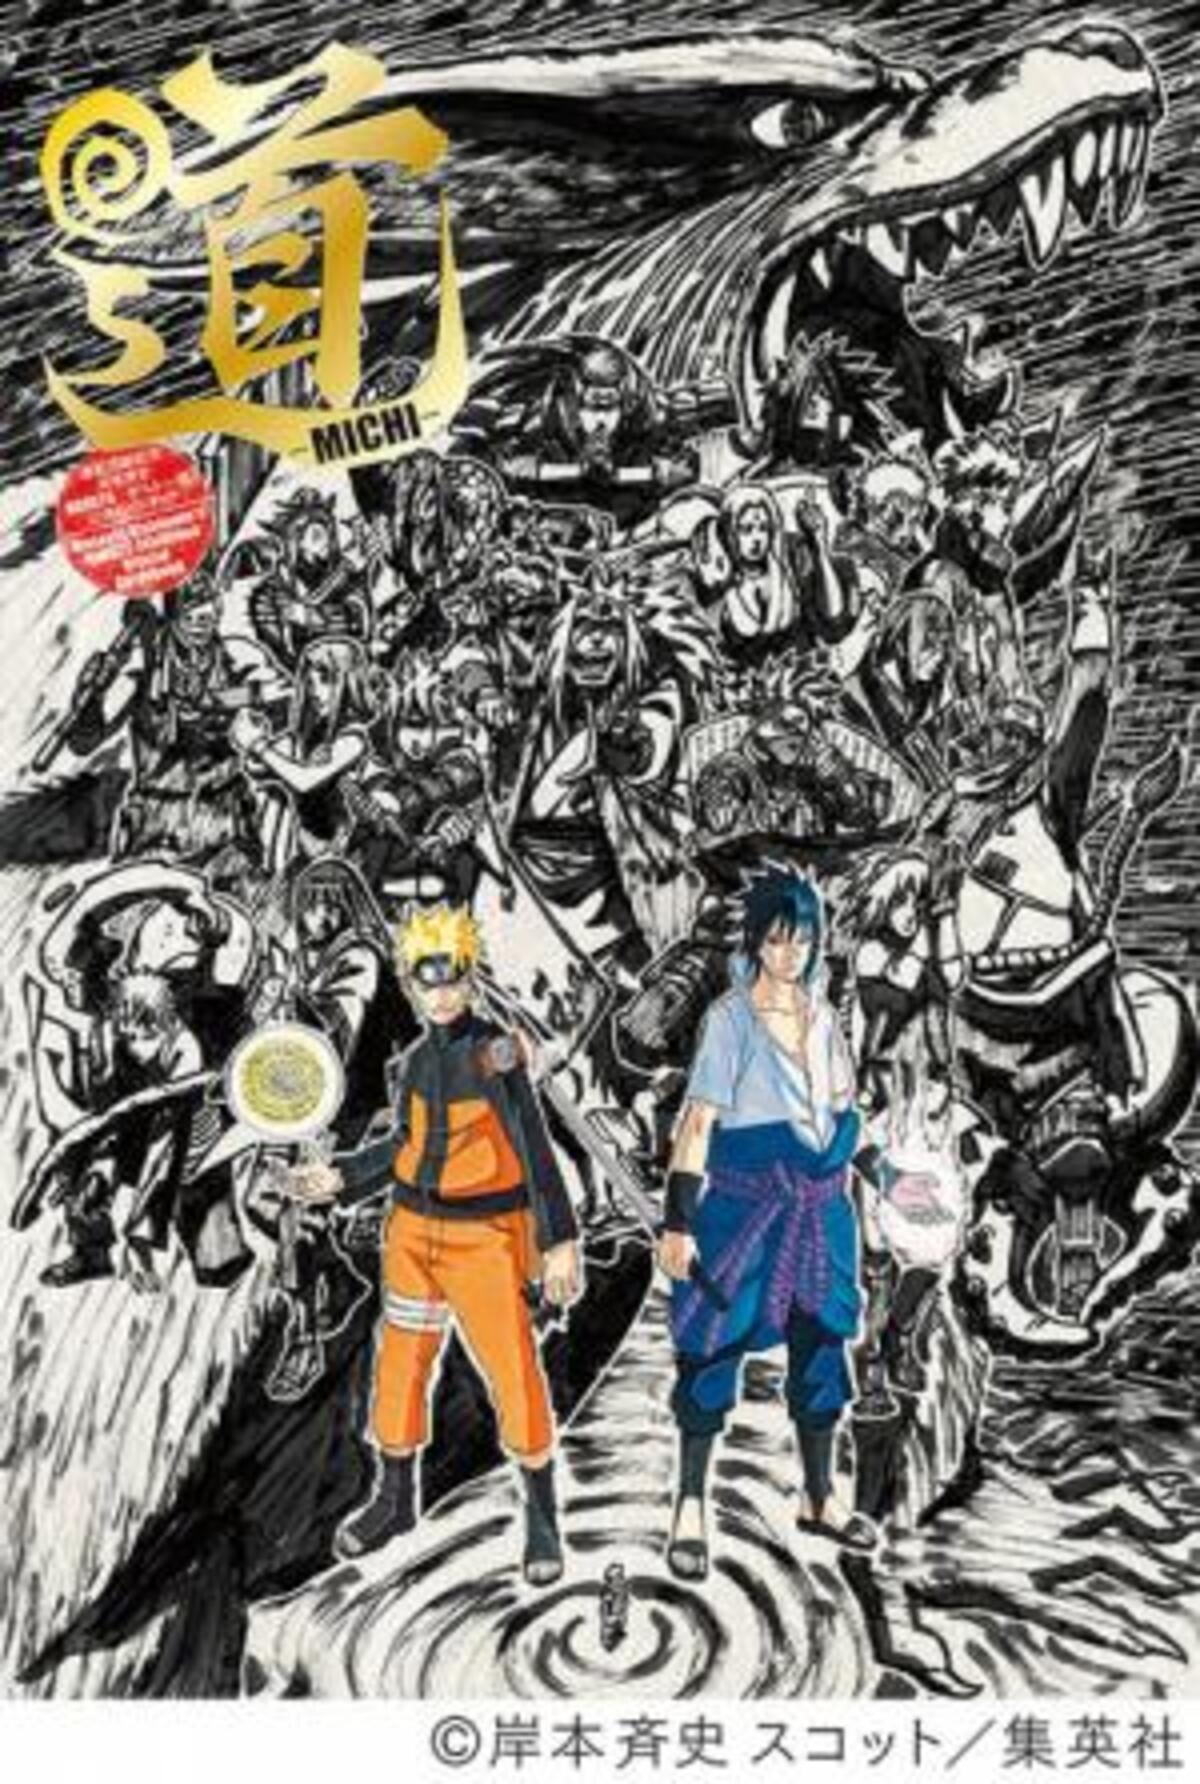 Naruto 岸本斉史 One Piece 尾田栄一郎 奇跡の対談が実現 15年4月13日 ウーマンエキサイト 1 2